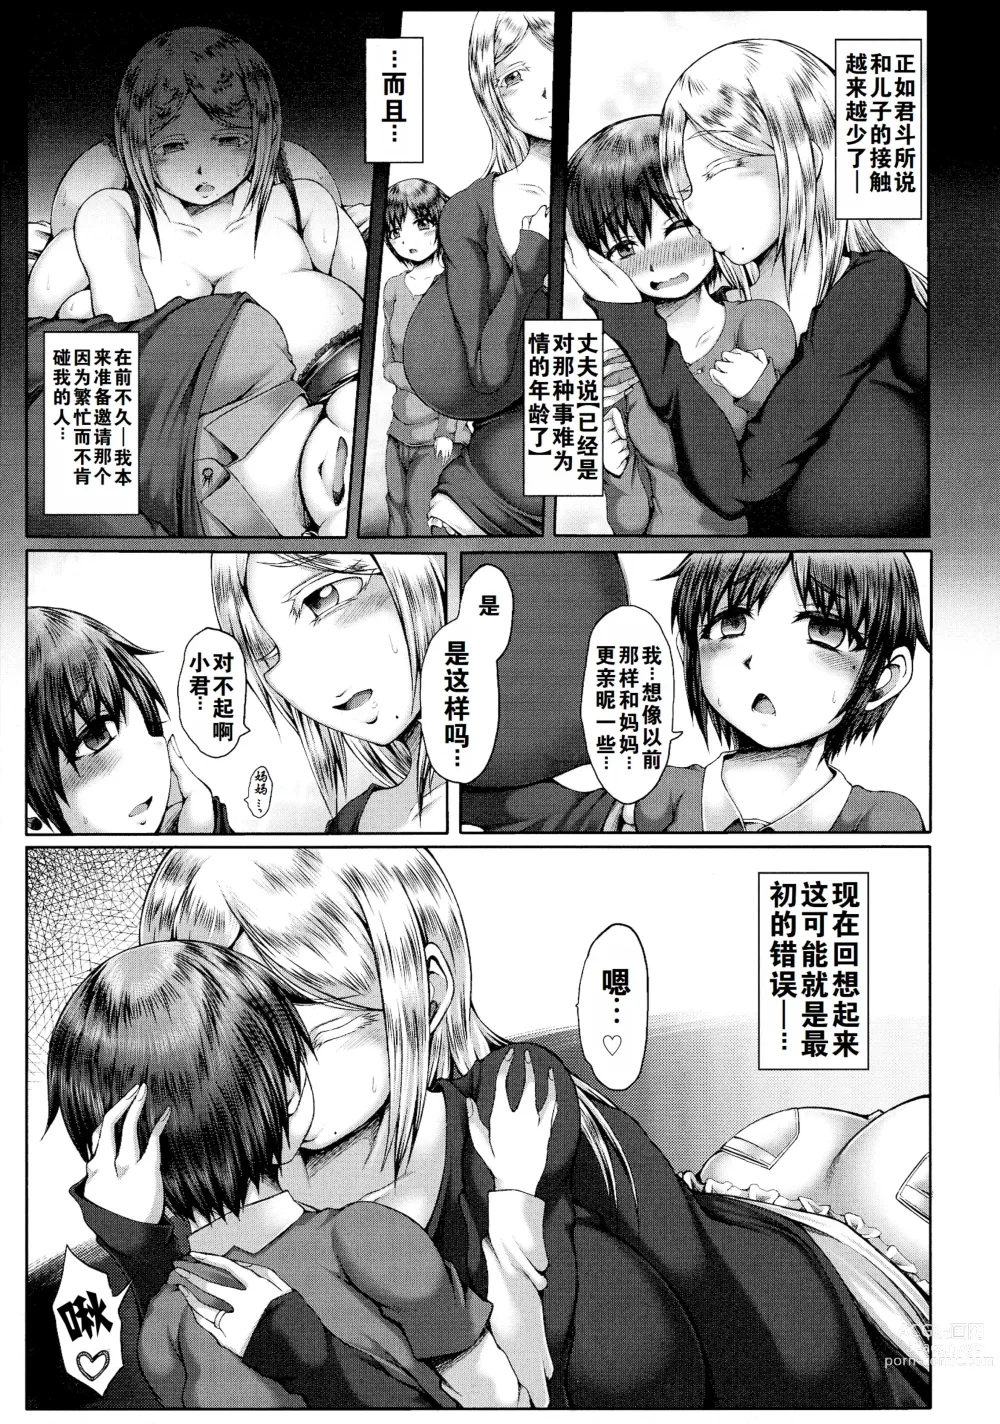 Page 3 of manga 禁断母子姦係+媚臭香ル母子相姦 +母子散图